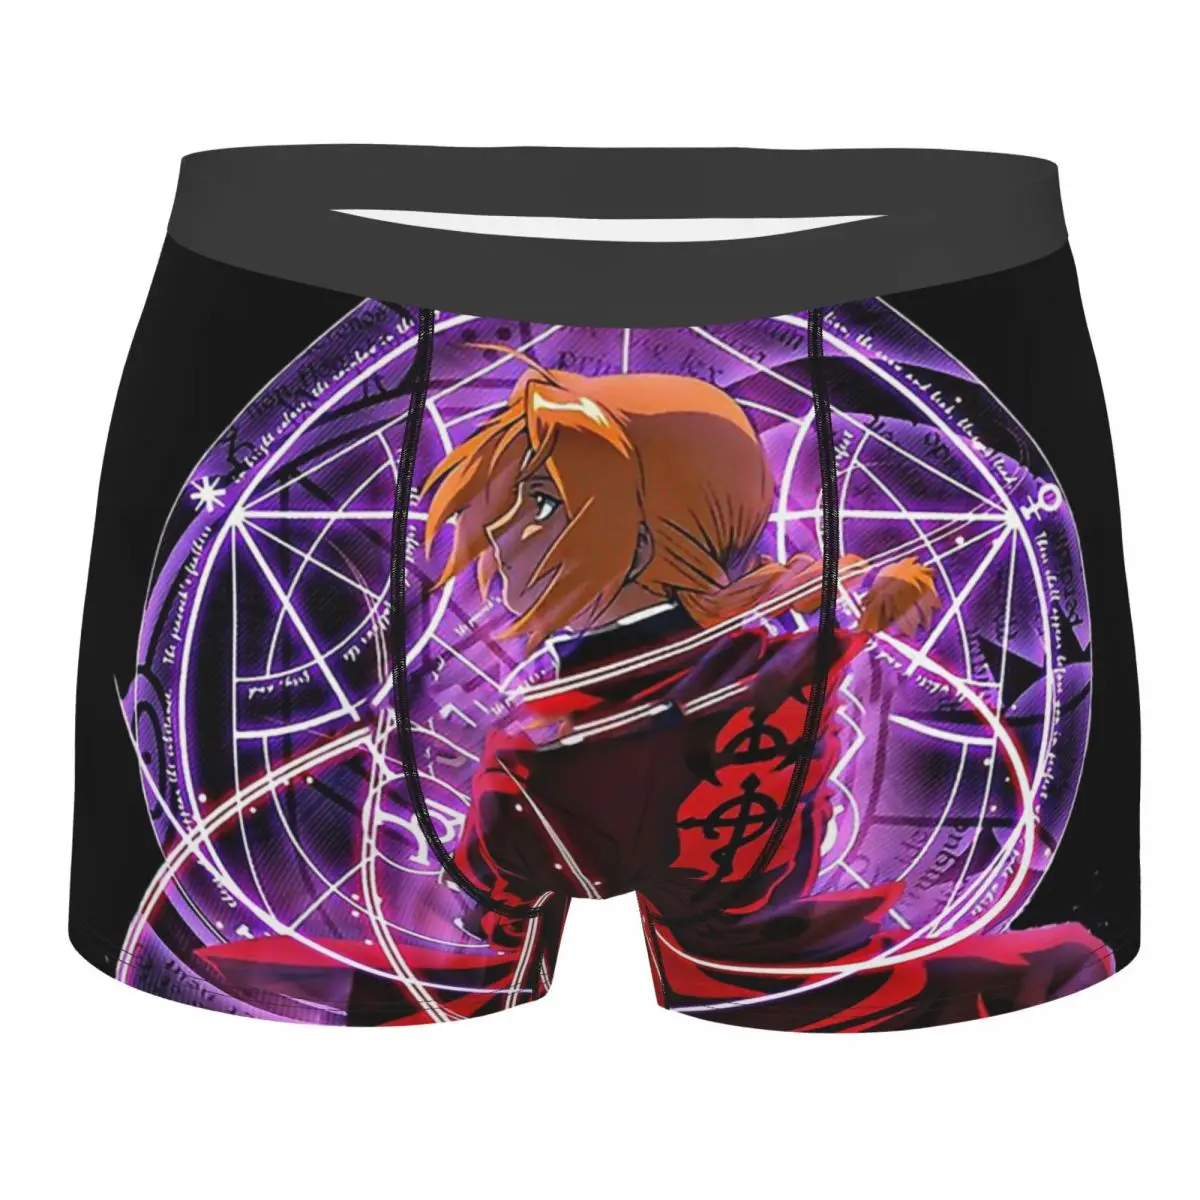 

Edward Eric Attack on Titan Titans Anime Television Series Underpants Cotton Panties Male Underwear Print Shorts Boxer Briefs